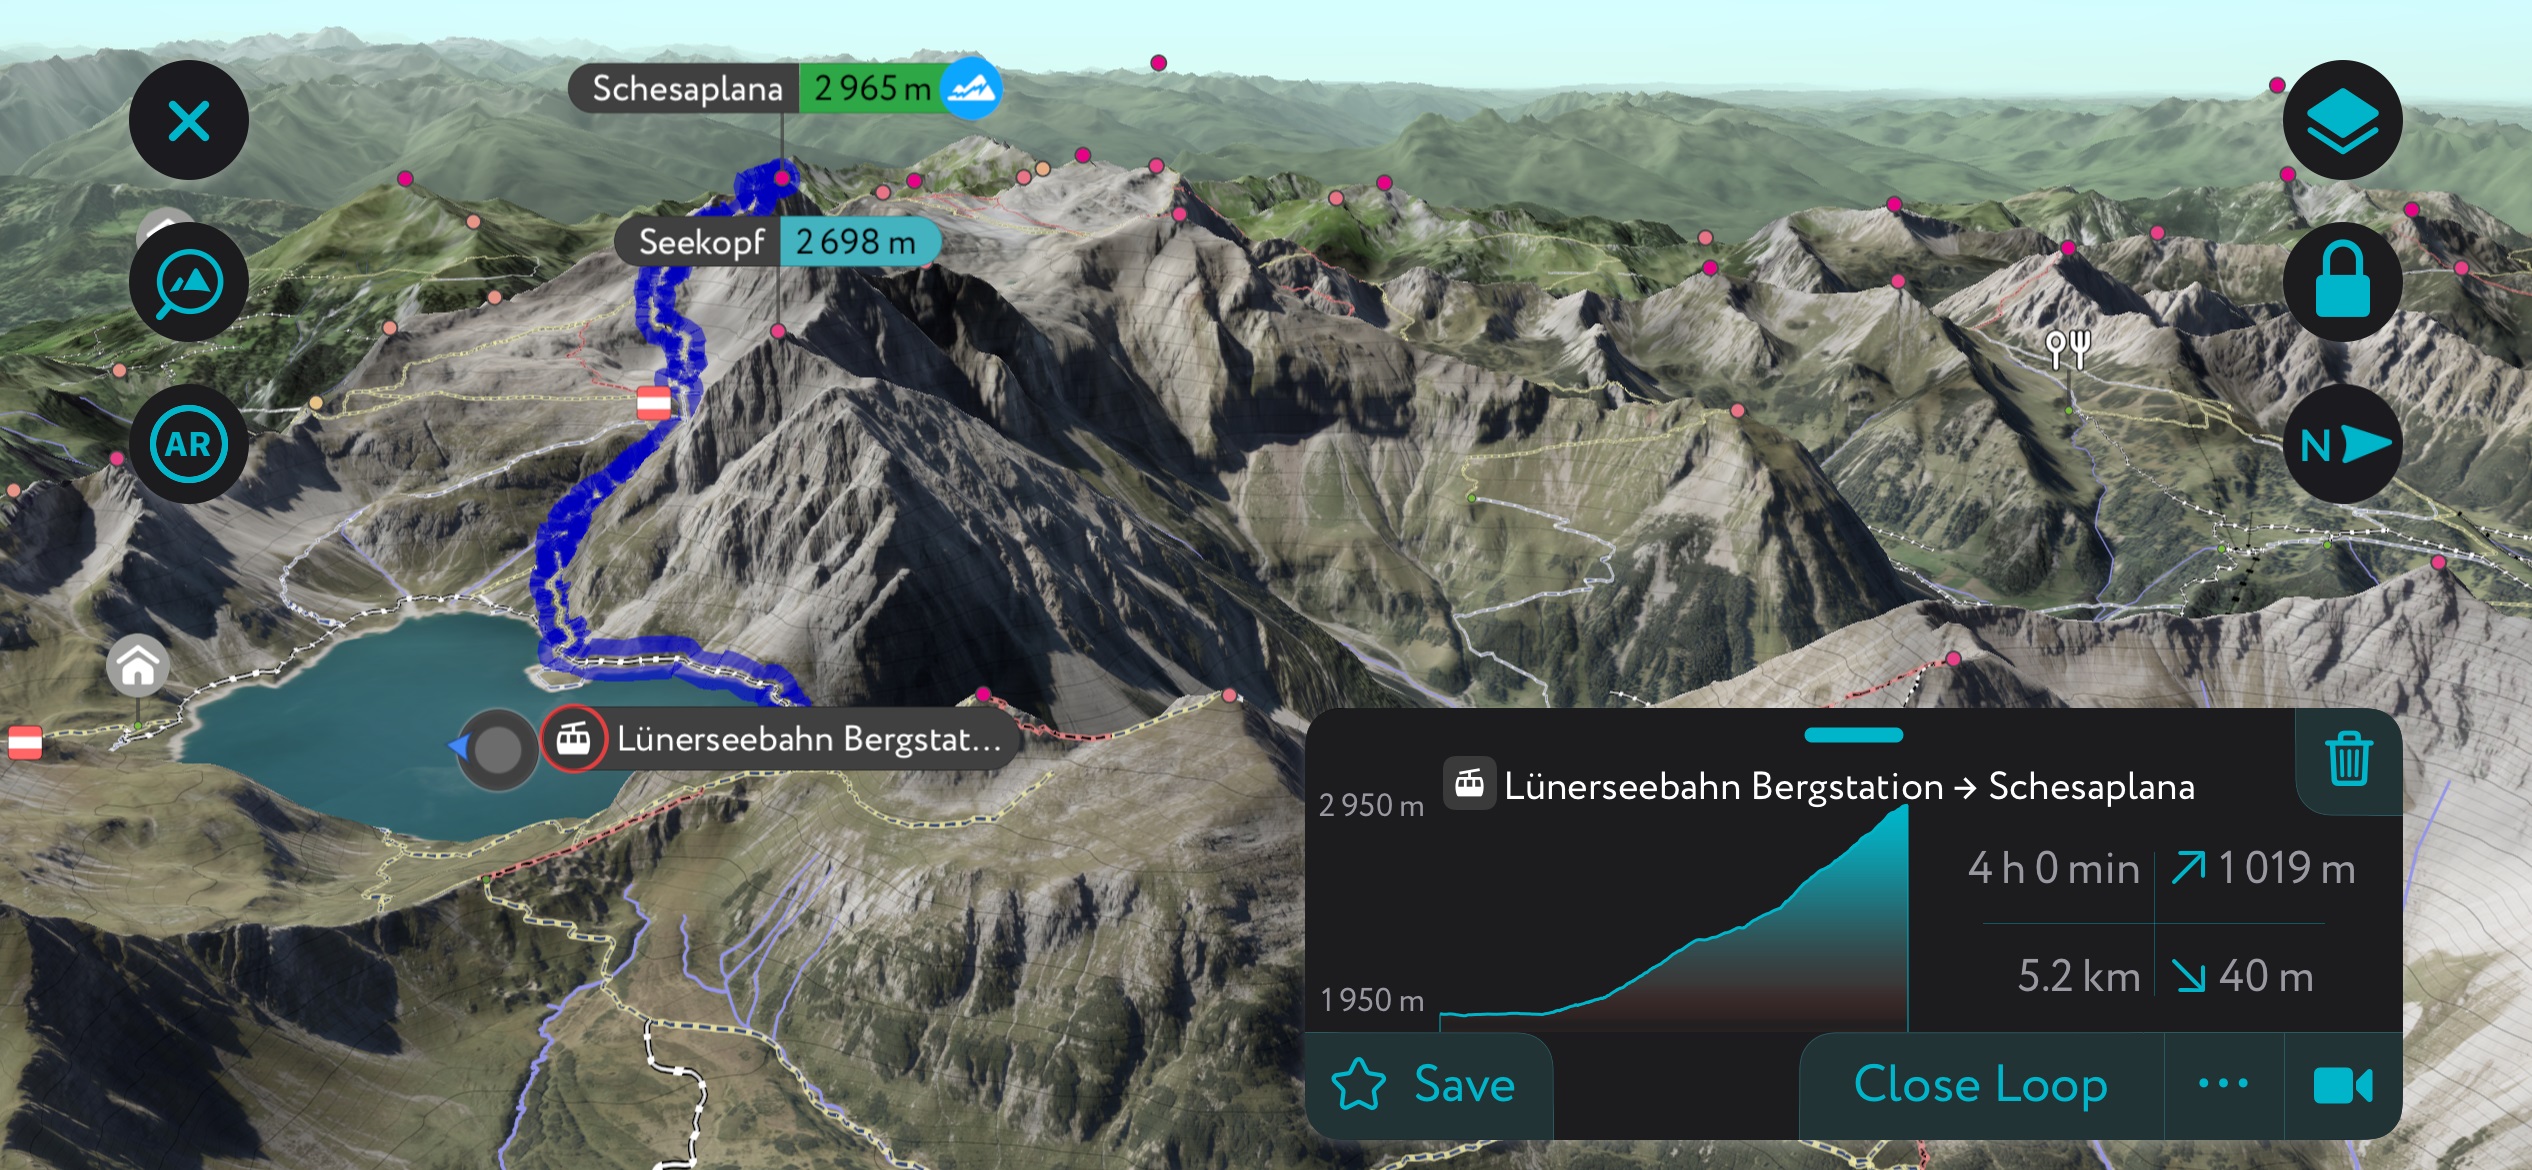 A generation of the route up Schesaplana using PeakVisor’s mobile app. Climbing Schesaplana